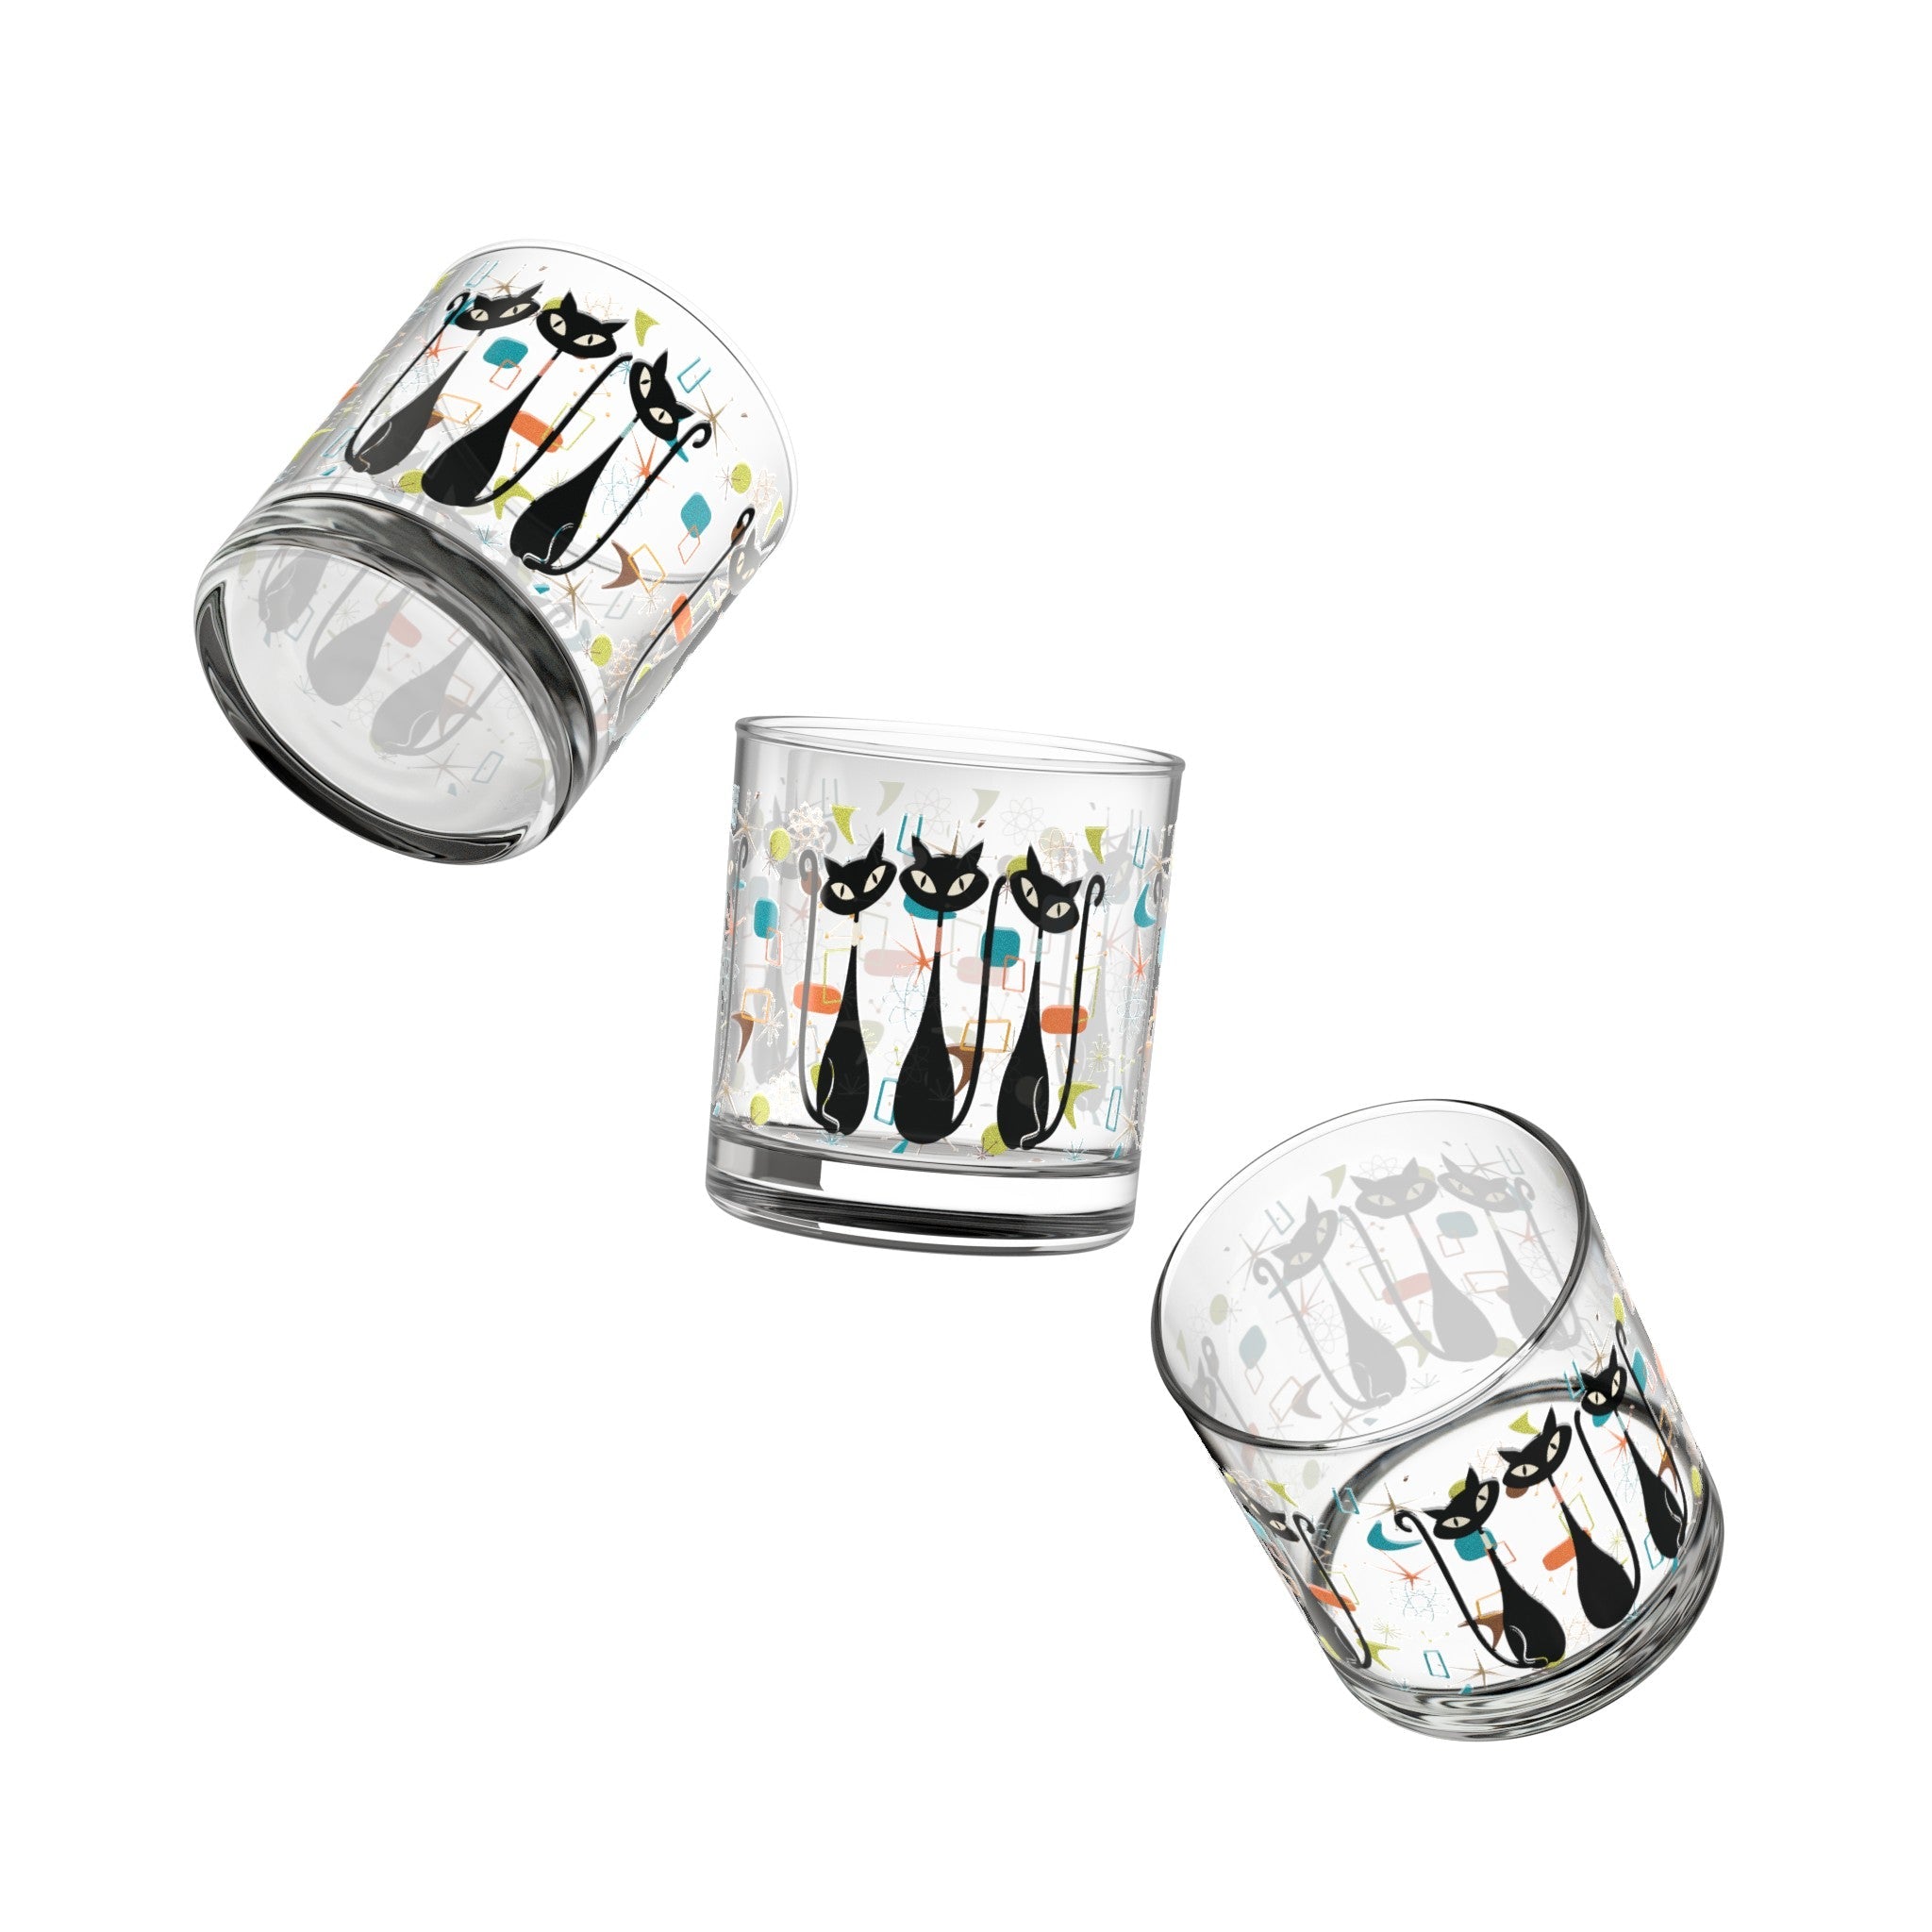 Kate McEnroe New York Atomic Kitschy Black Cat Rocks Glass, 10oz Mid Century Modern Whiskey Glass, Retro Lowball Cocktail Glass, 1950s Vintage Style BarwareCocktail Glasses17503756330485255986